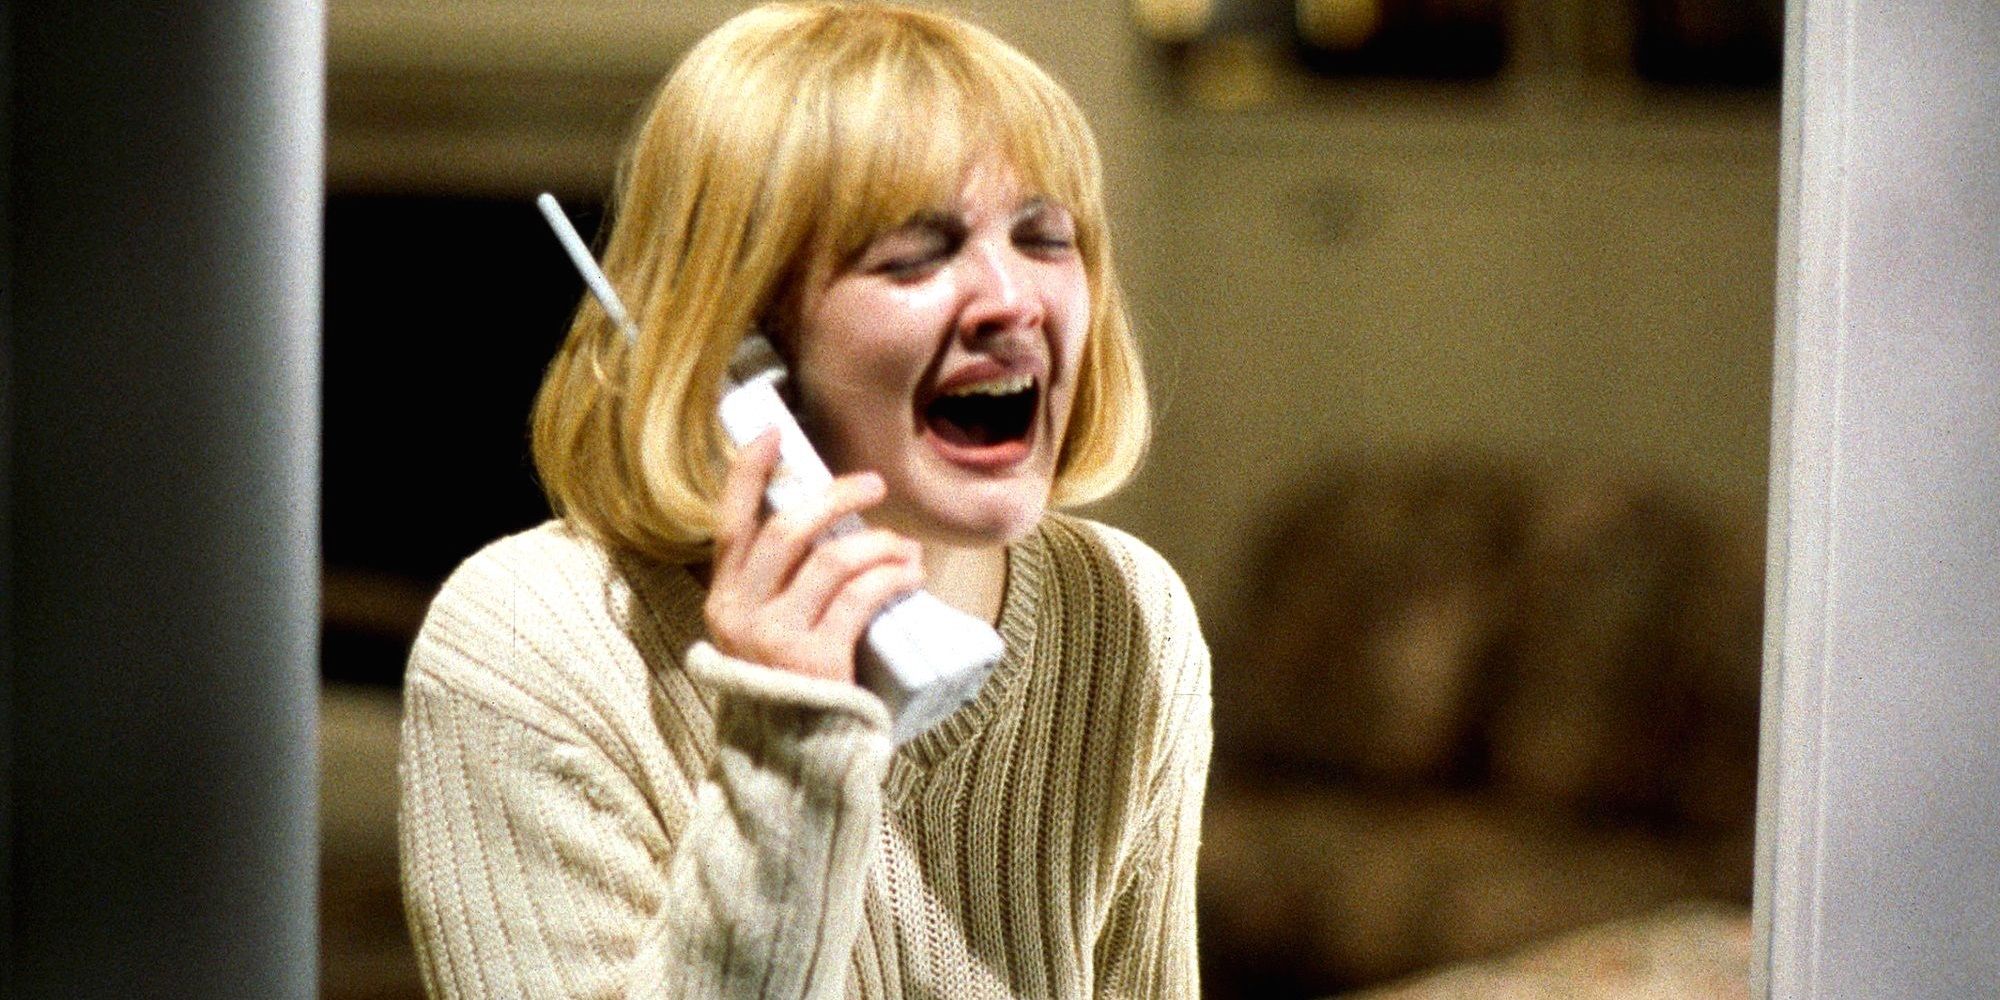 Drew Barrymore as Casey talks on the phone in Scream